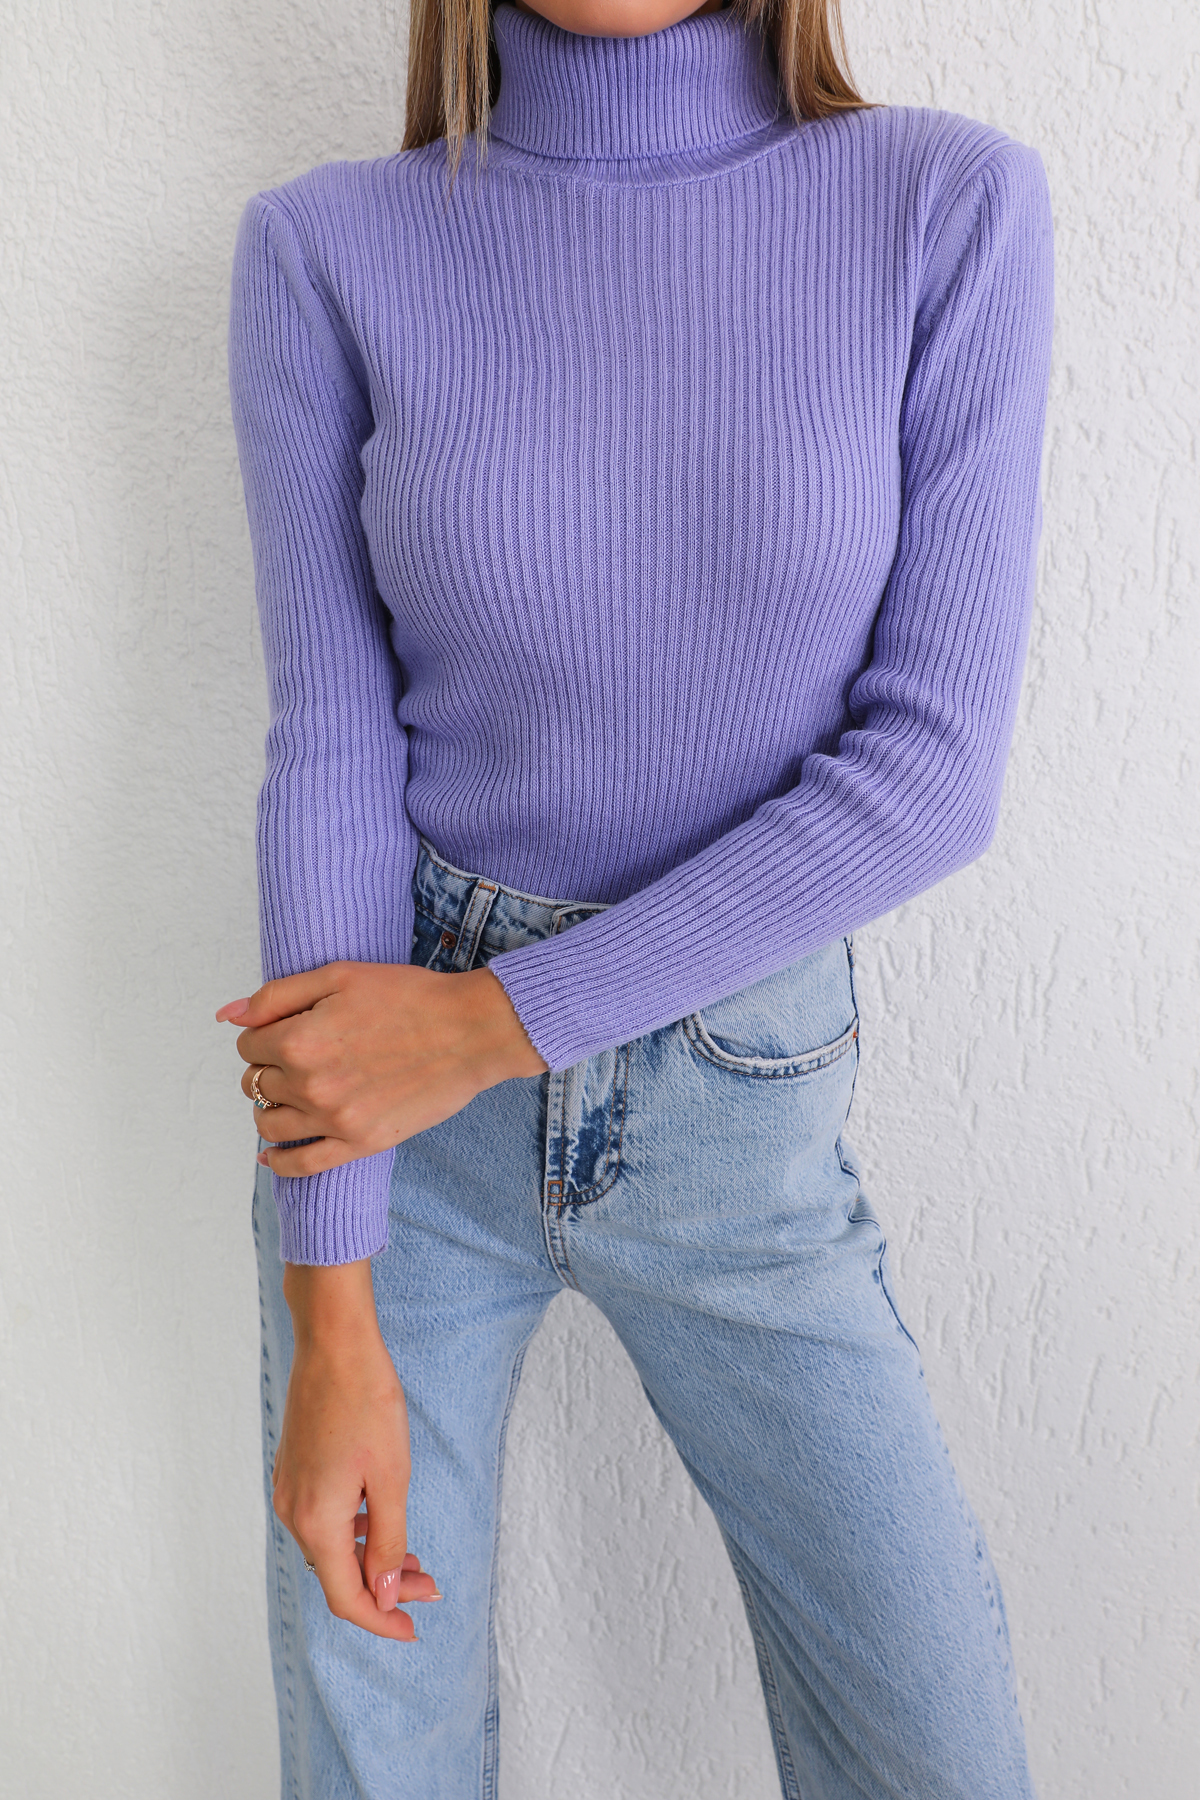 BİKELİFE Women's Lilac Lycra Stretchy Turtleneck Knitwear Sweater